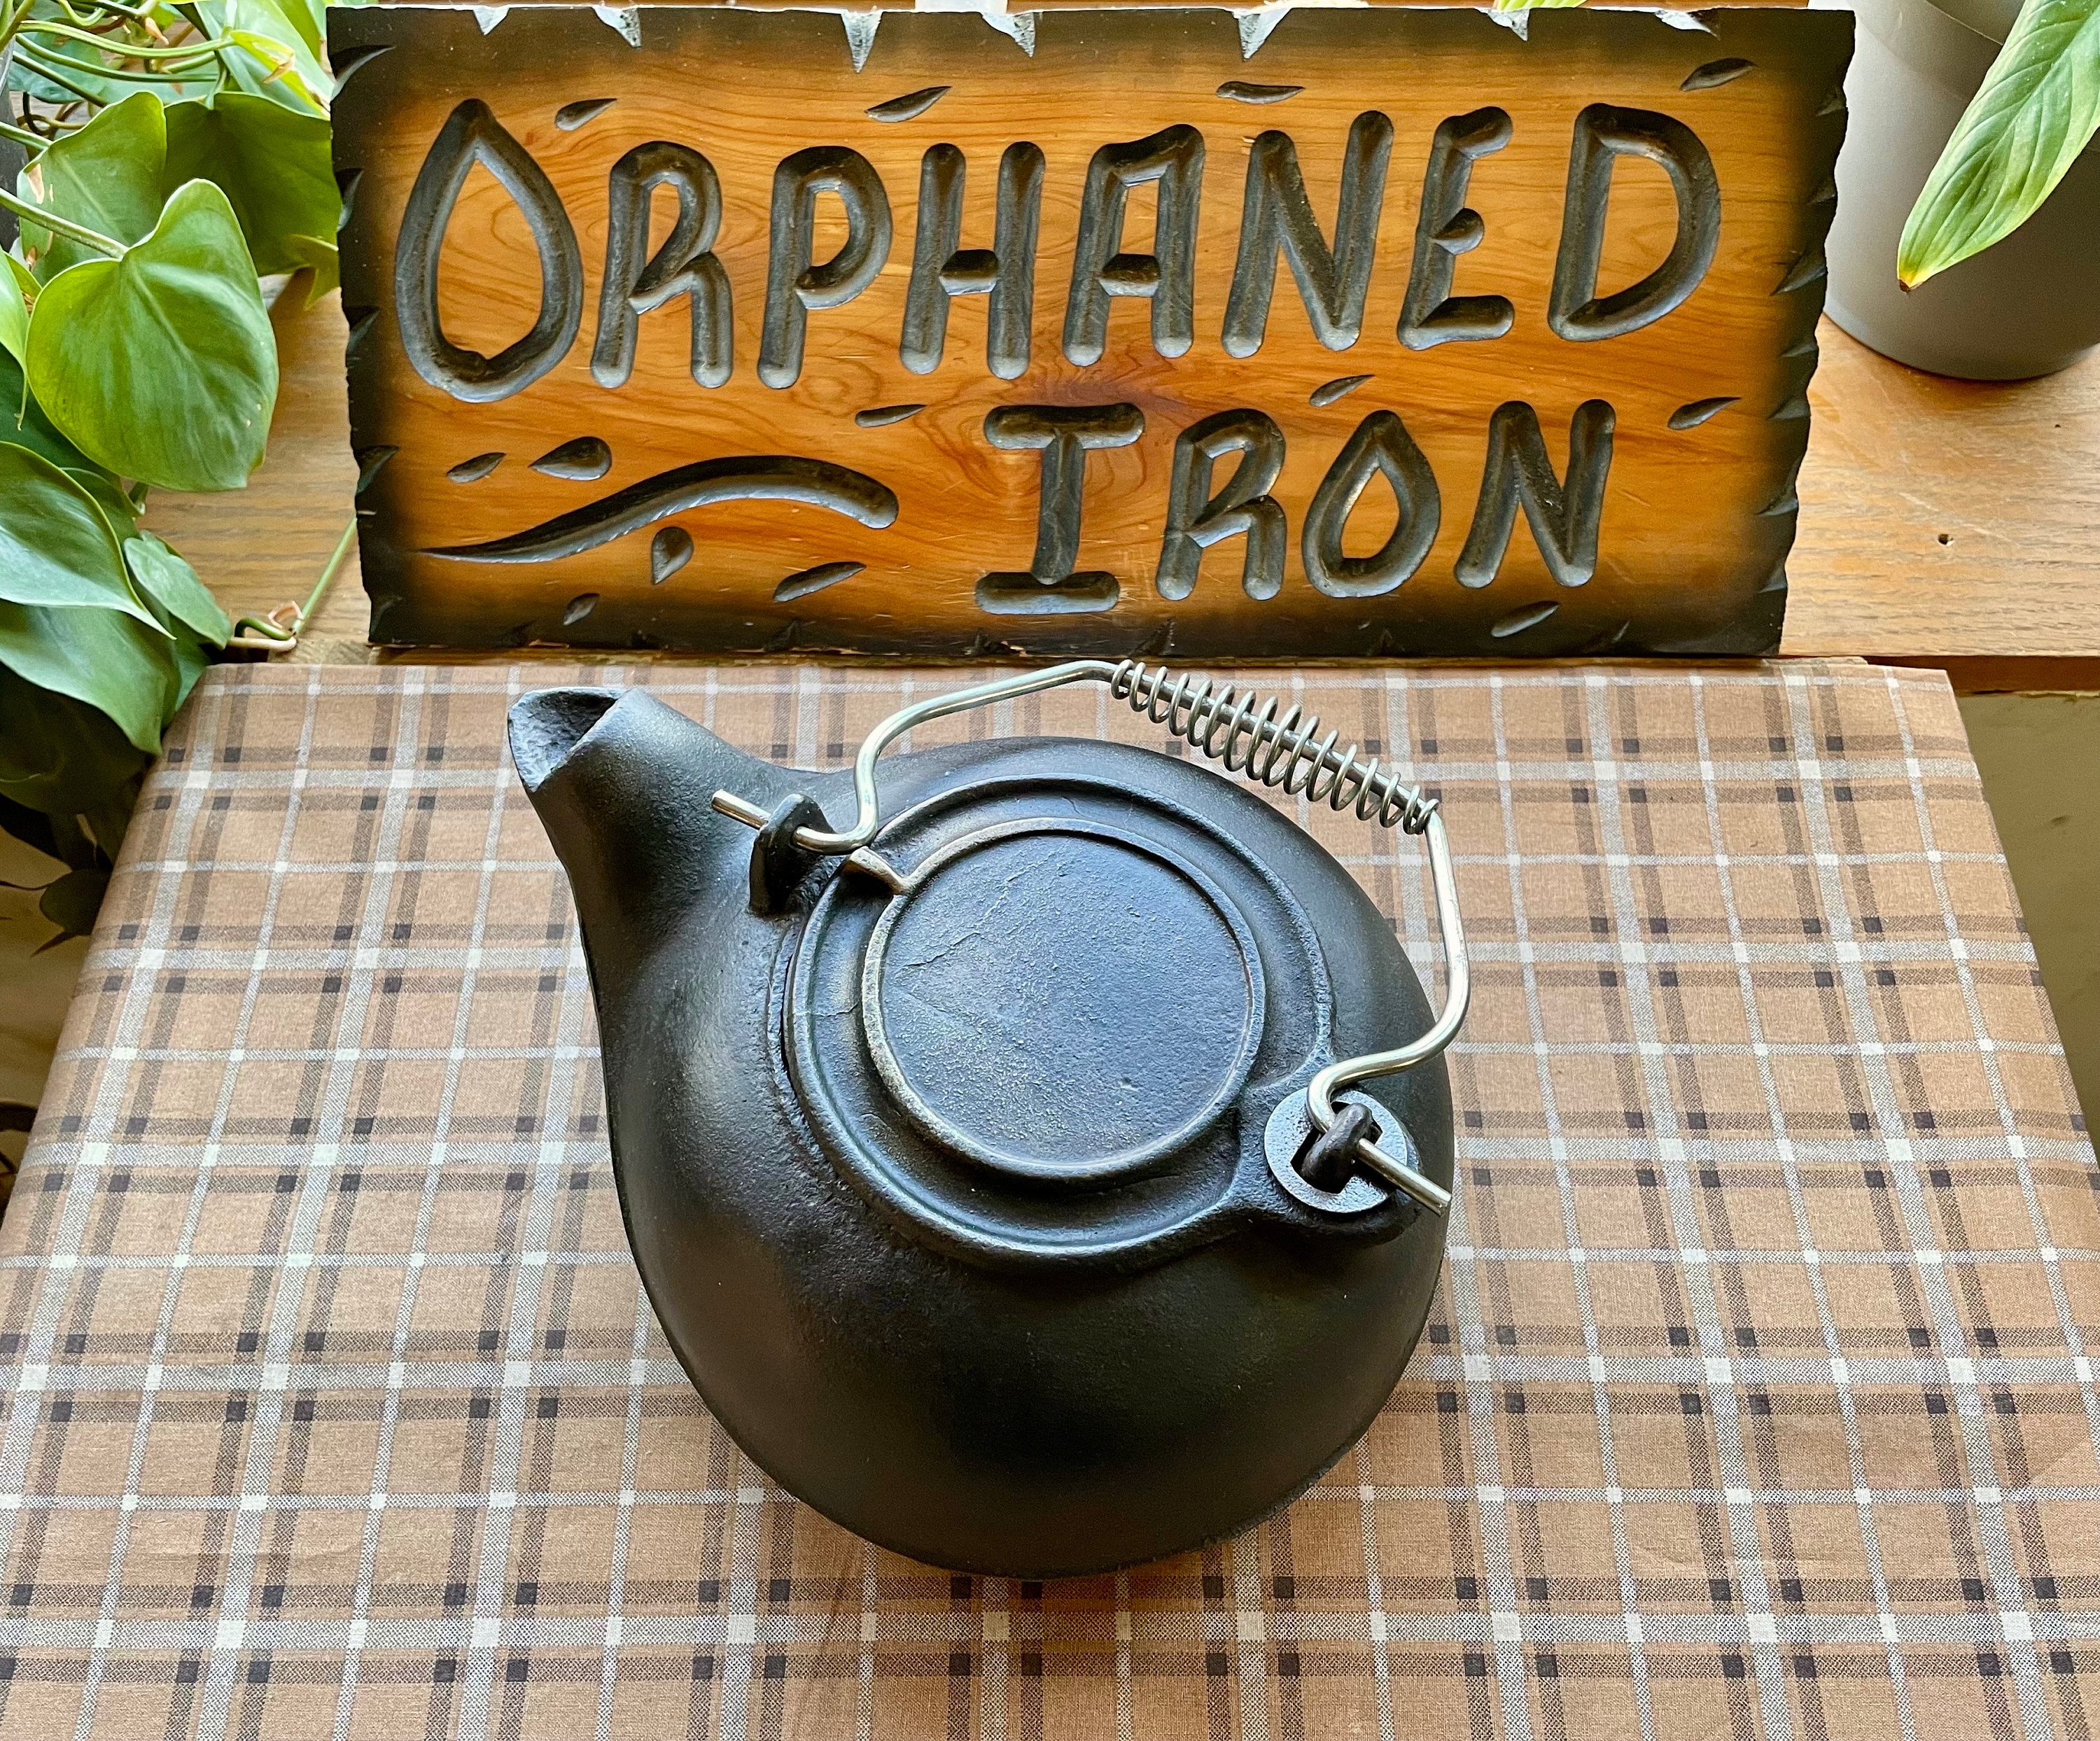 Kitchen HQ 1.3-Quart Cast Iron Tea Kettle with Infuser